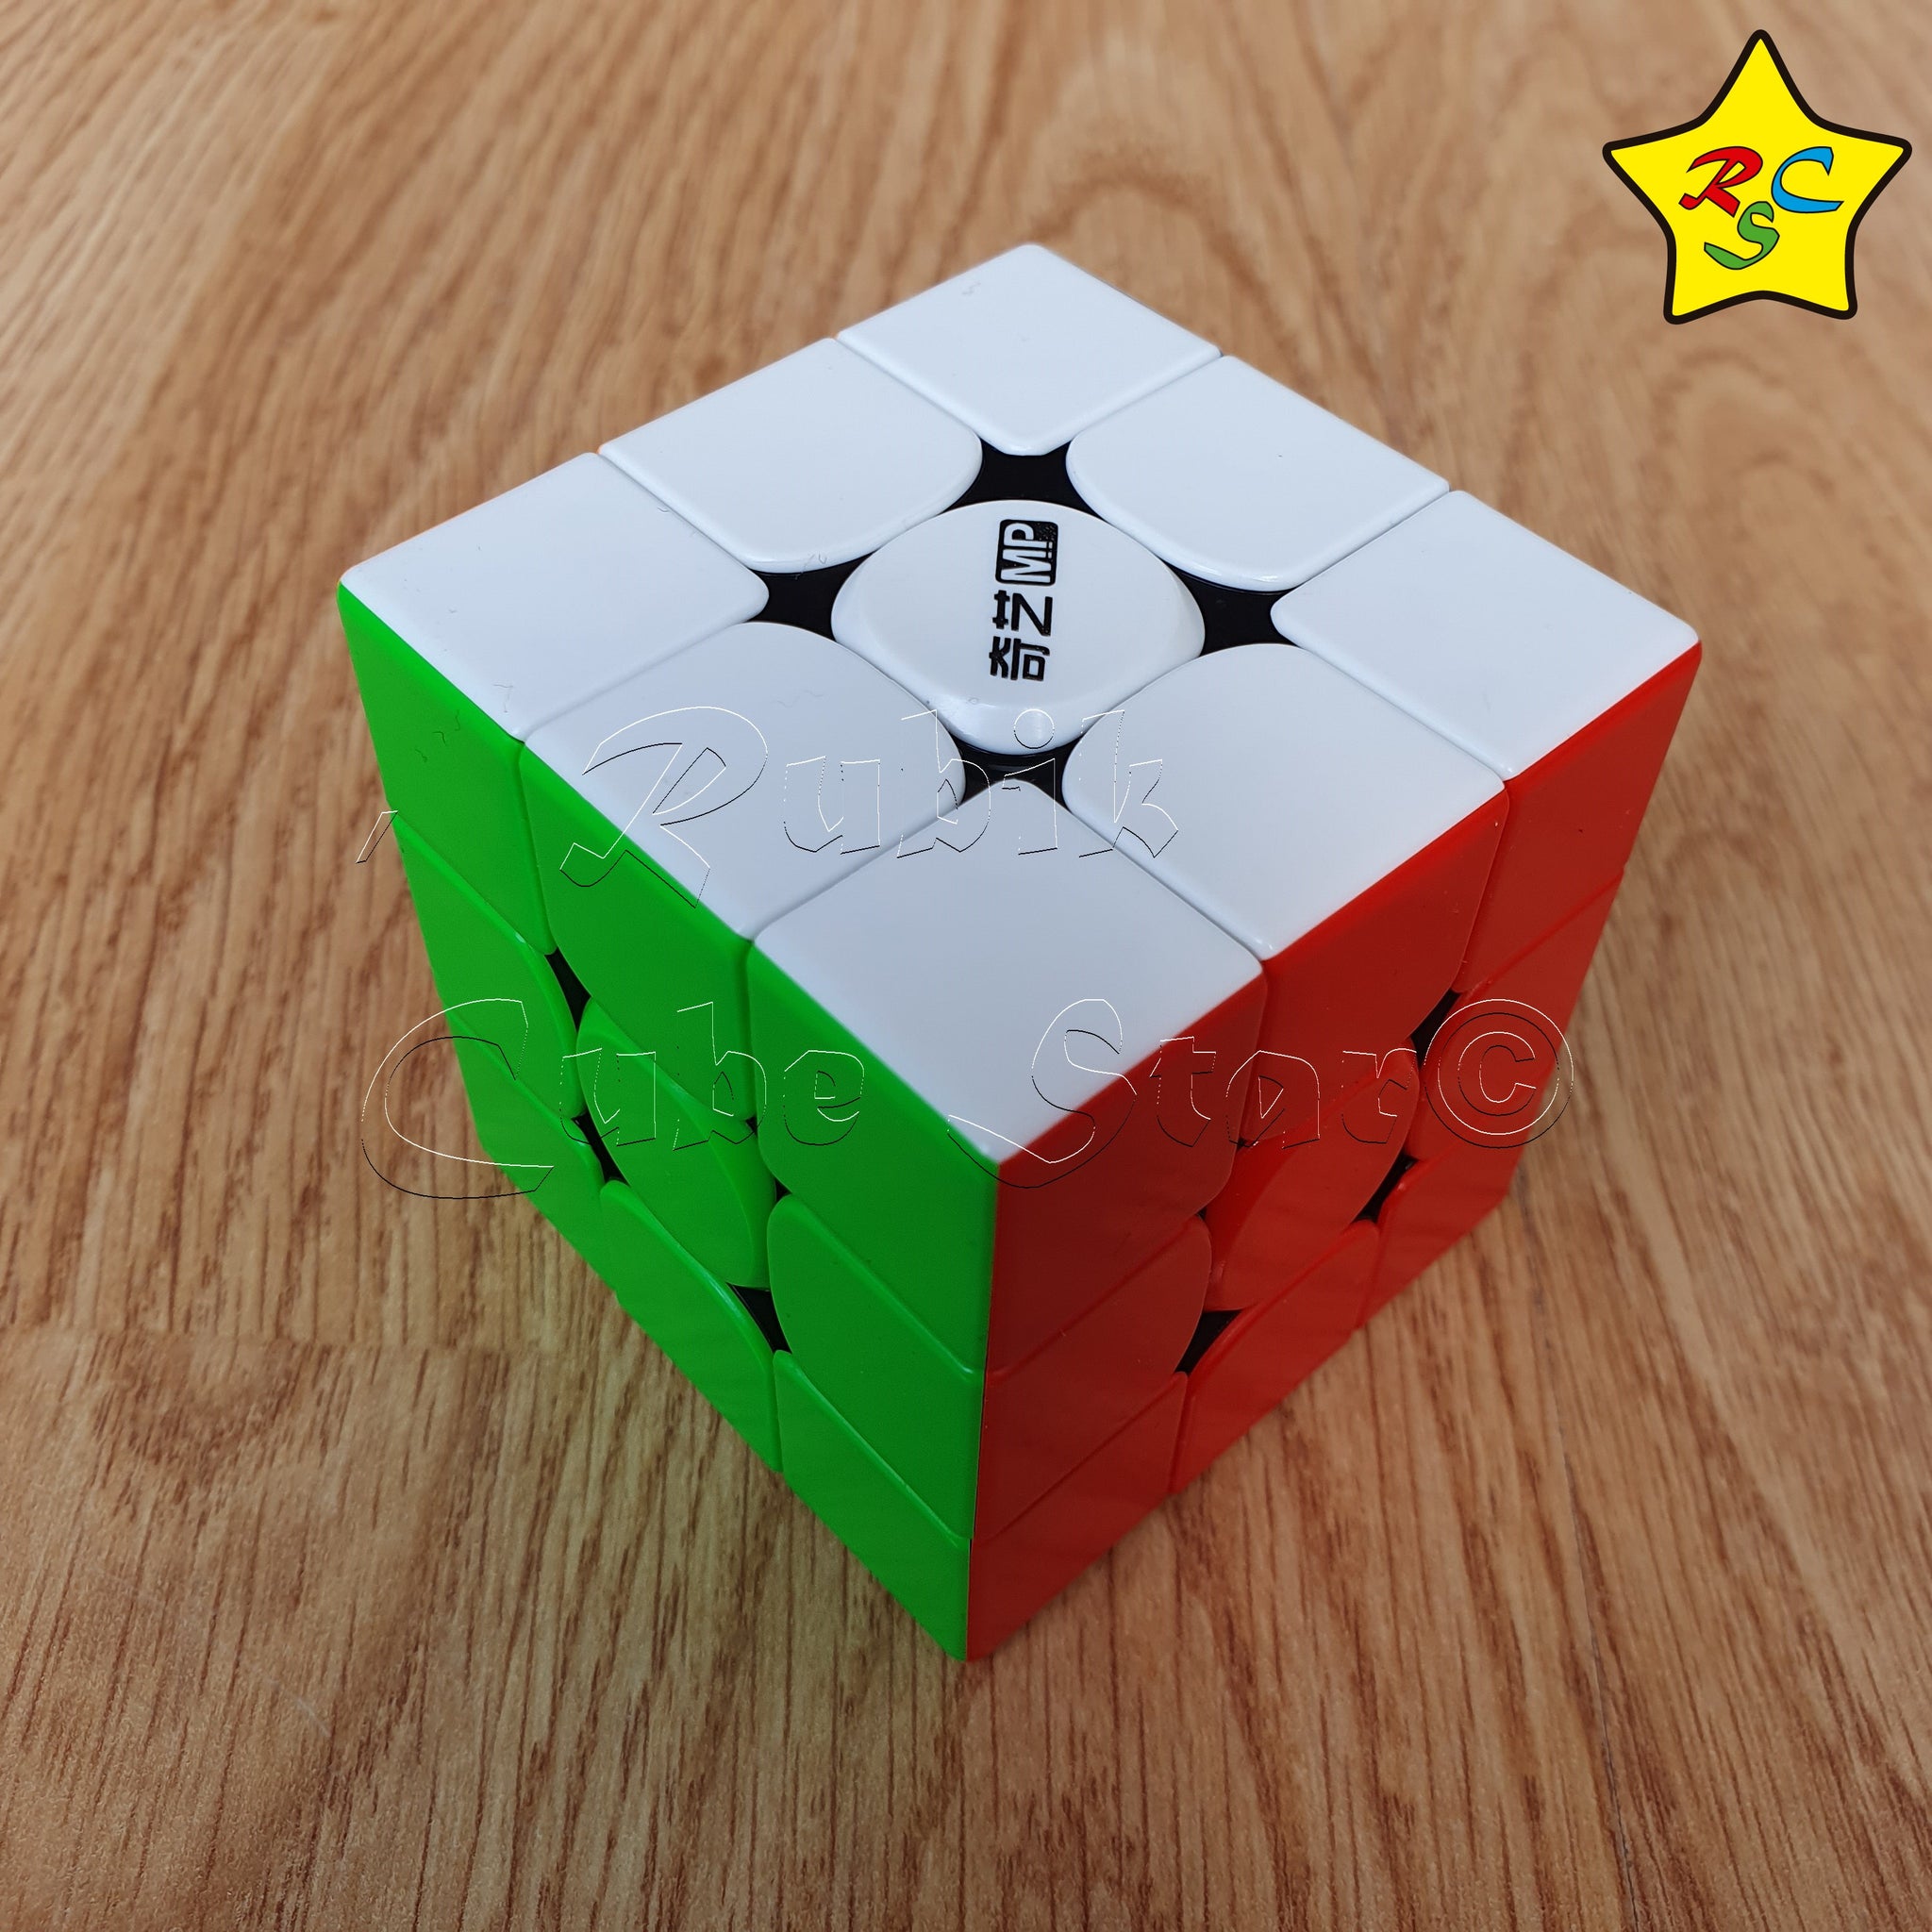 Qiyi MS Series Cubo Mágico Magnético, Cubos de Velocidade, Jogo De